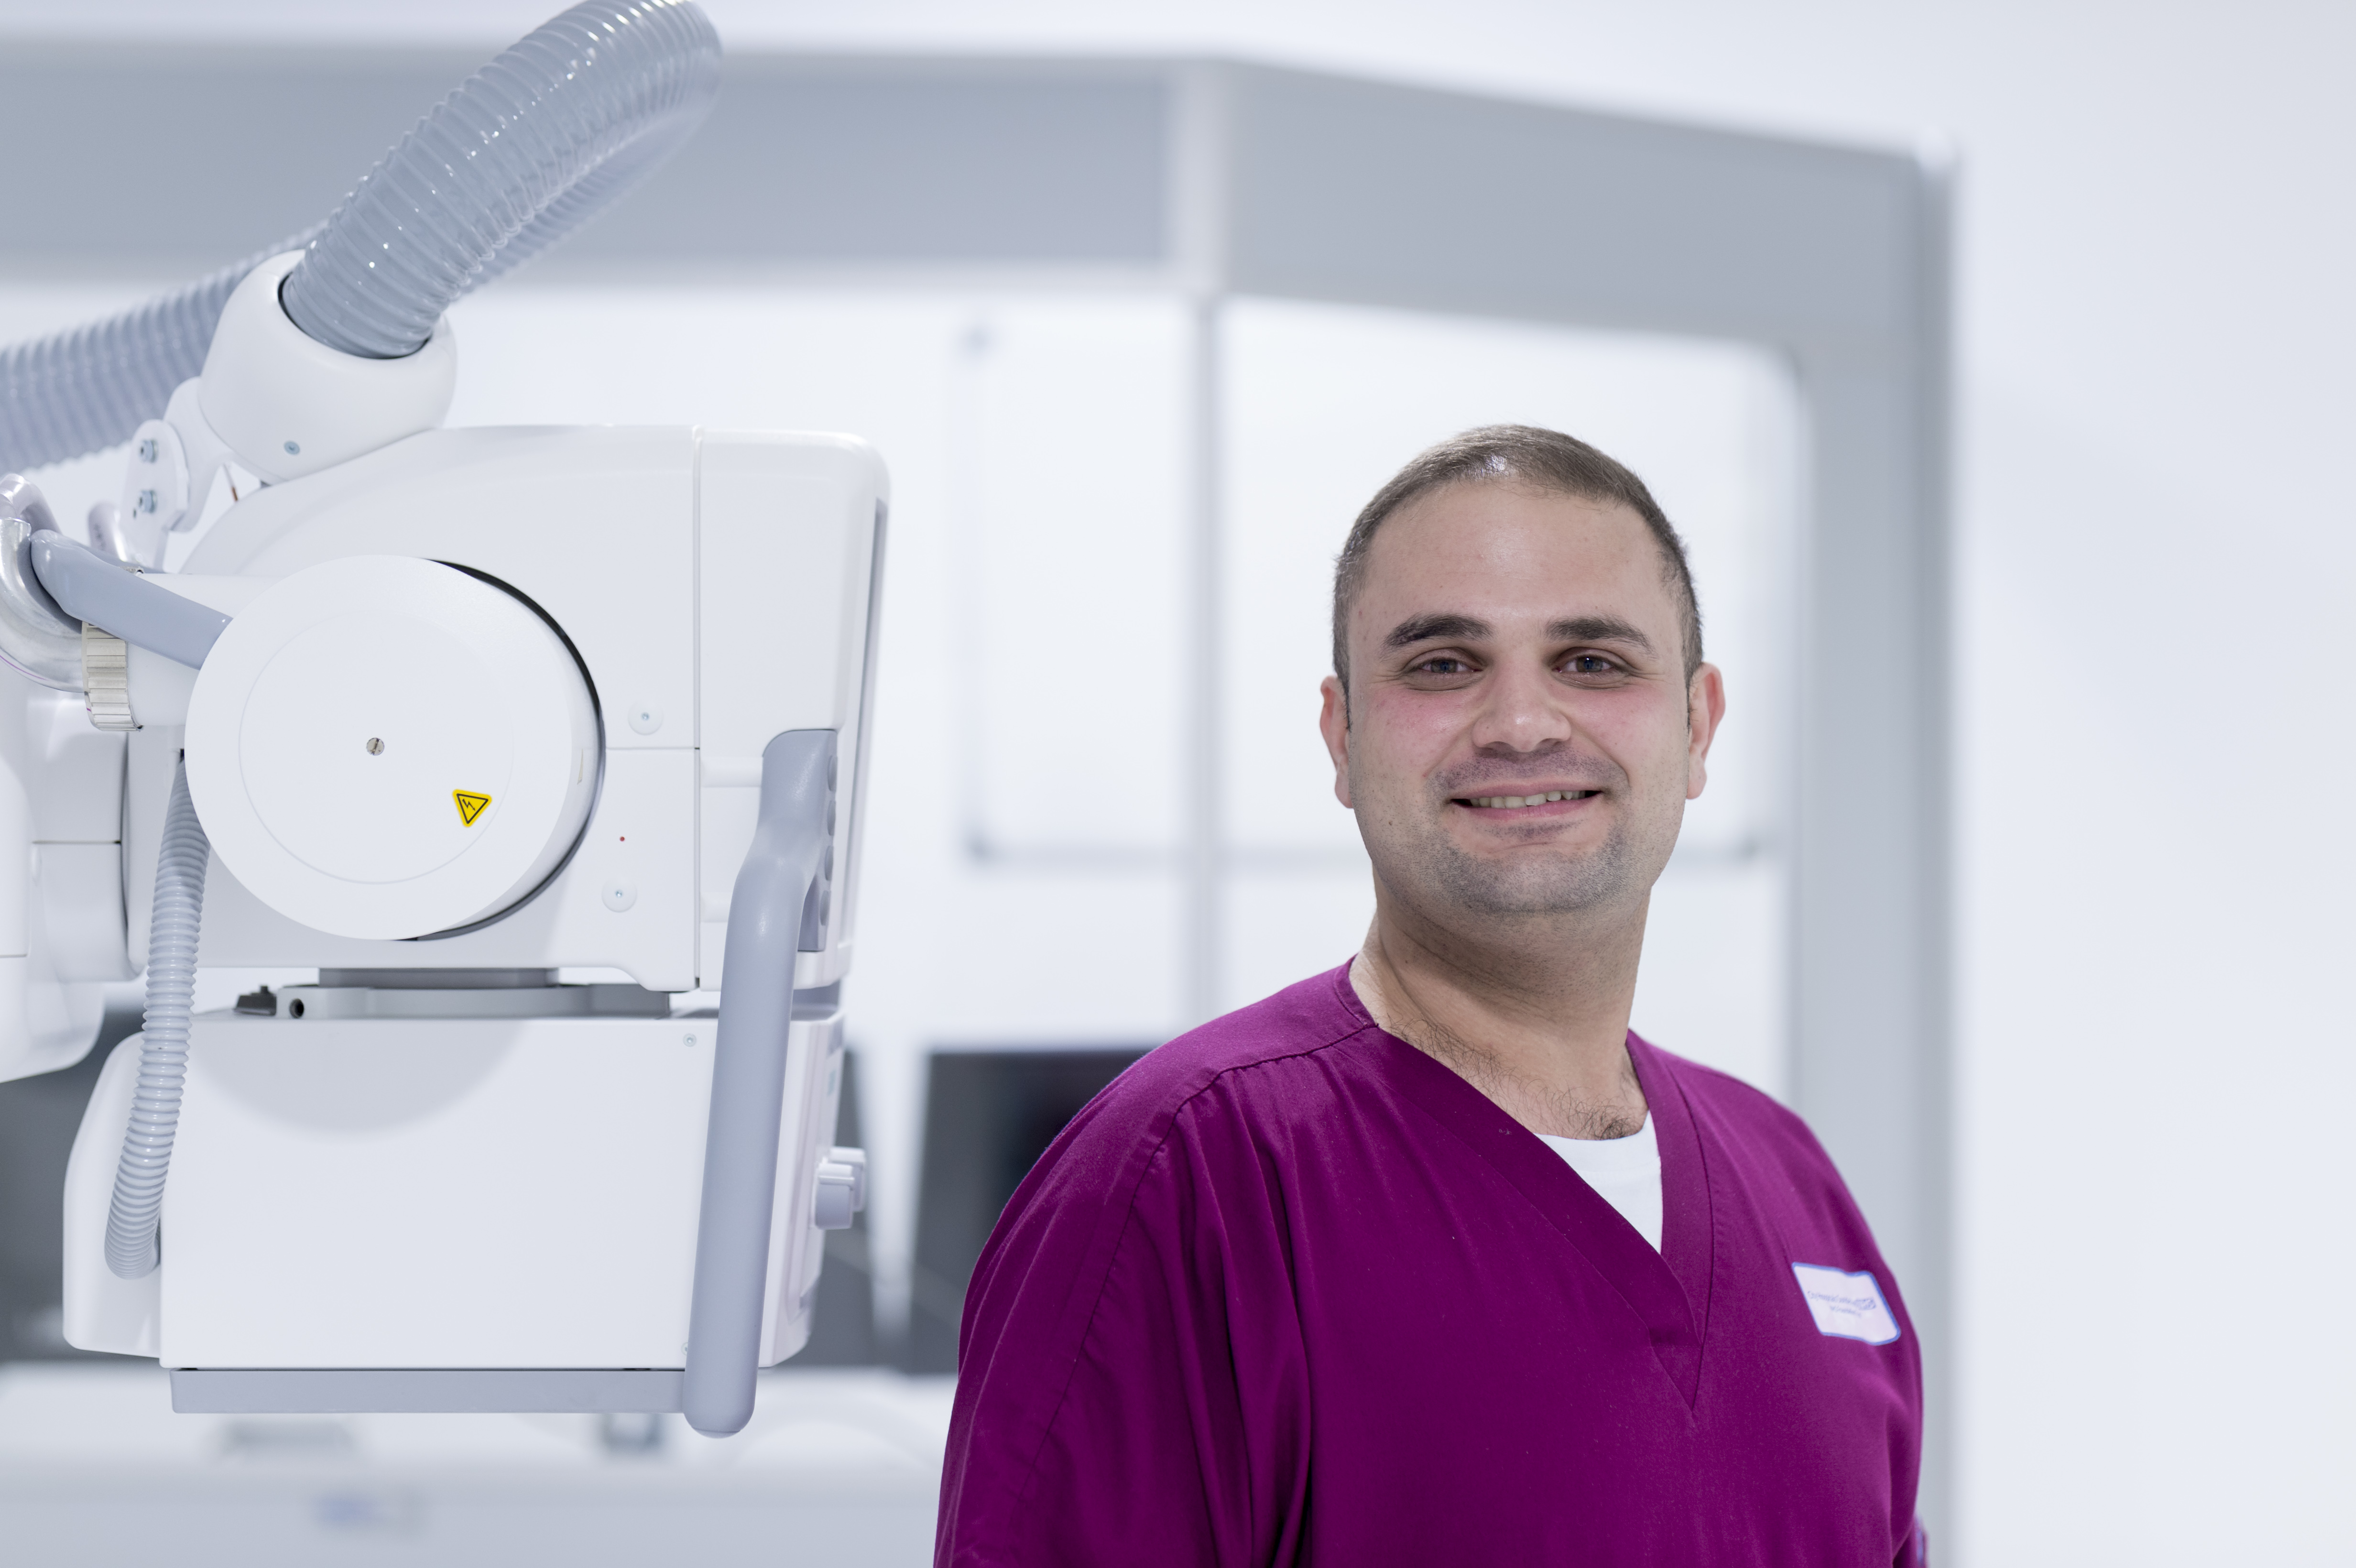 Sunderland Royal Hospital improves patient flow in radiology with MyPorter